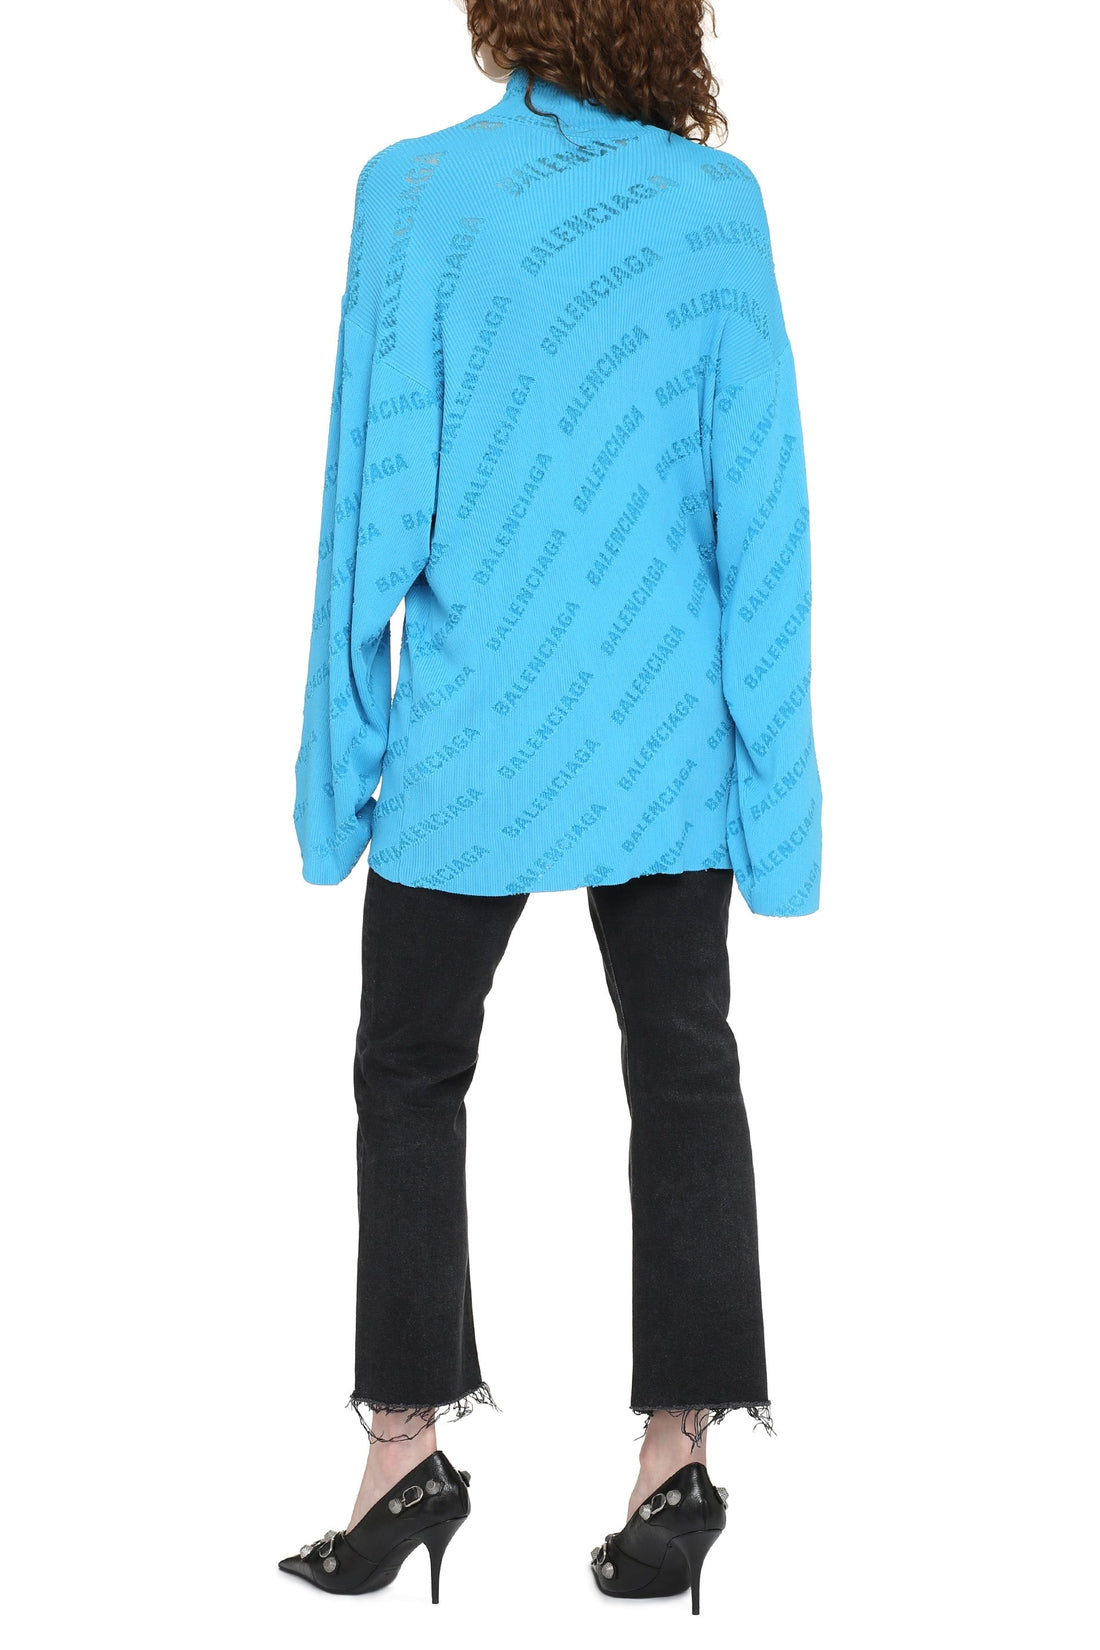 Balenciaga-OUTLET-SALE-Turtleneck sweater-ARCHIVIST